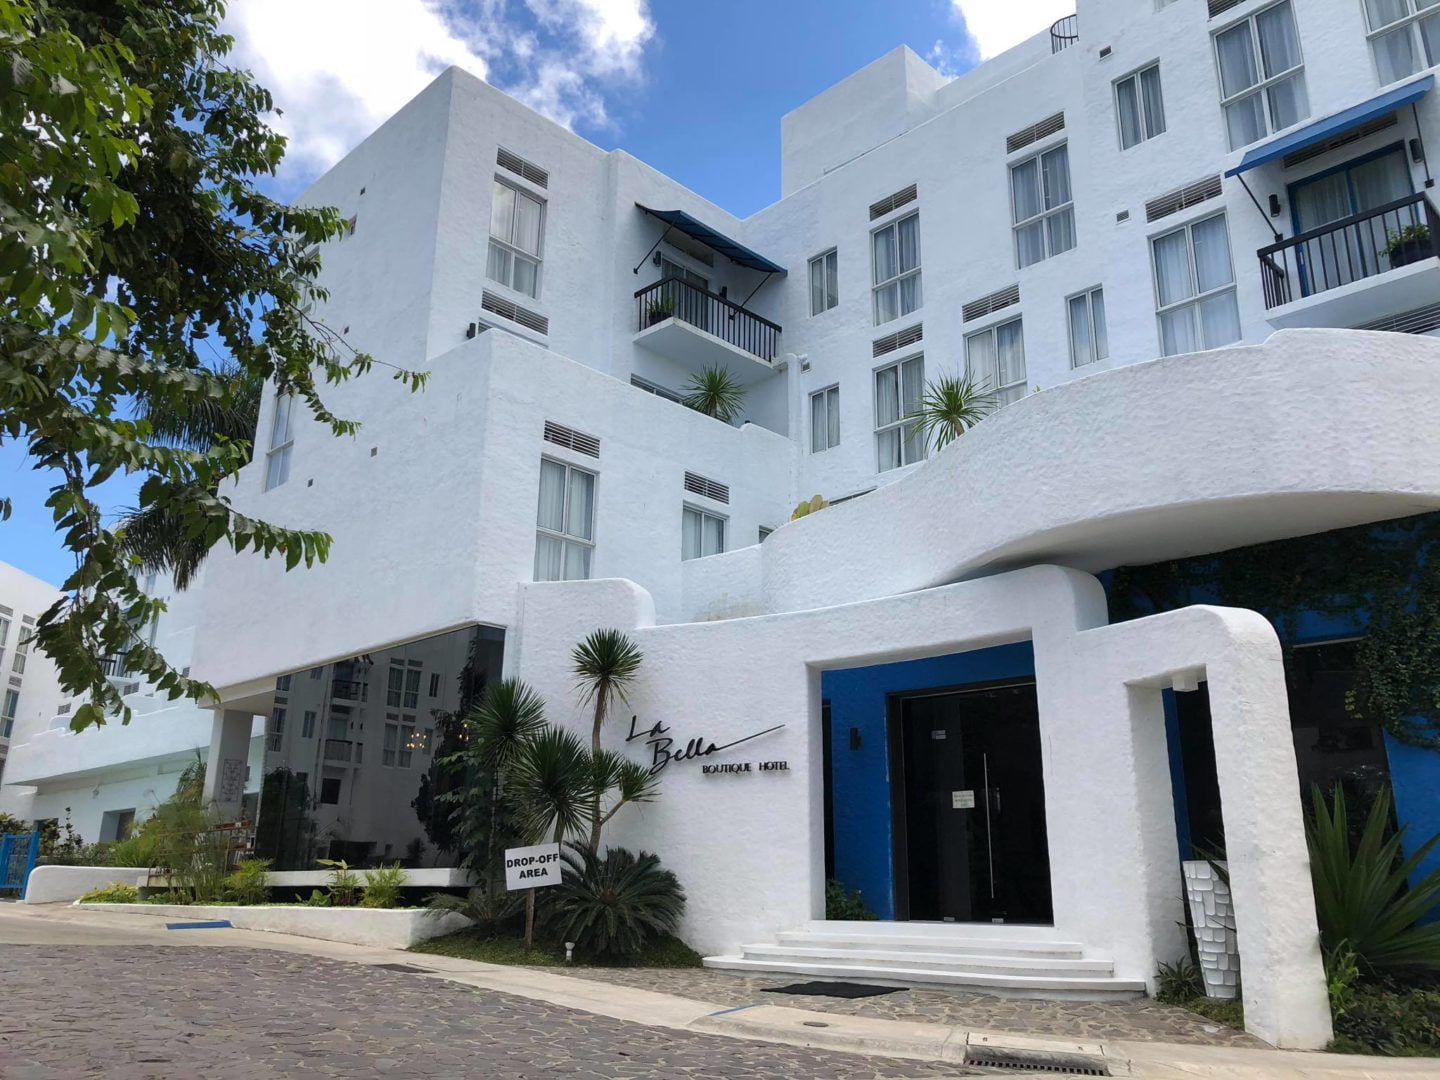 La Bella Tagaytay: Santorini-Inspired Hotel in Tagaytay